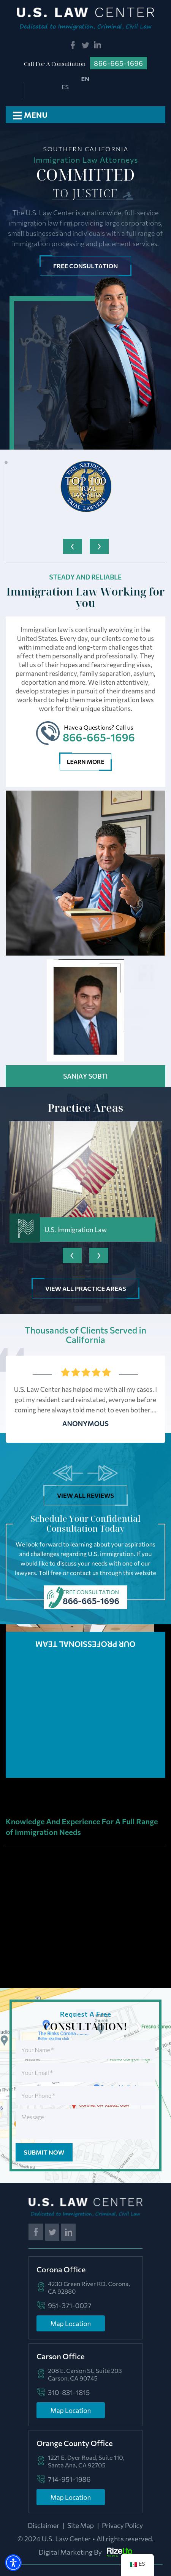 US Law Center - Orange CA Lawyers